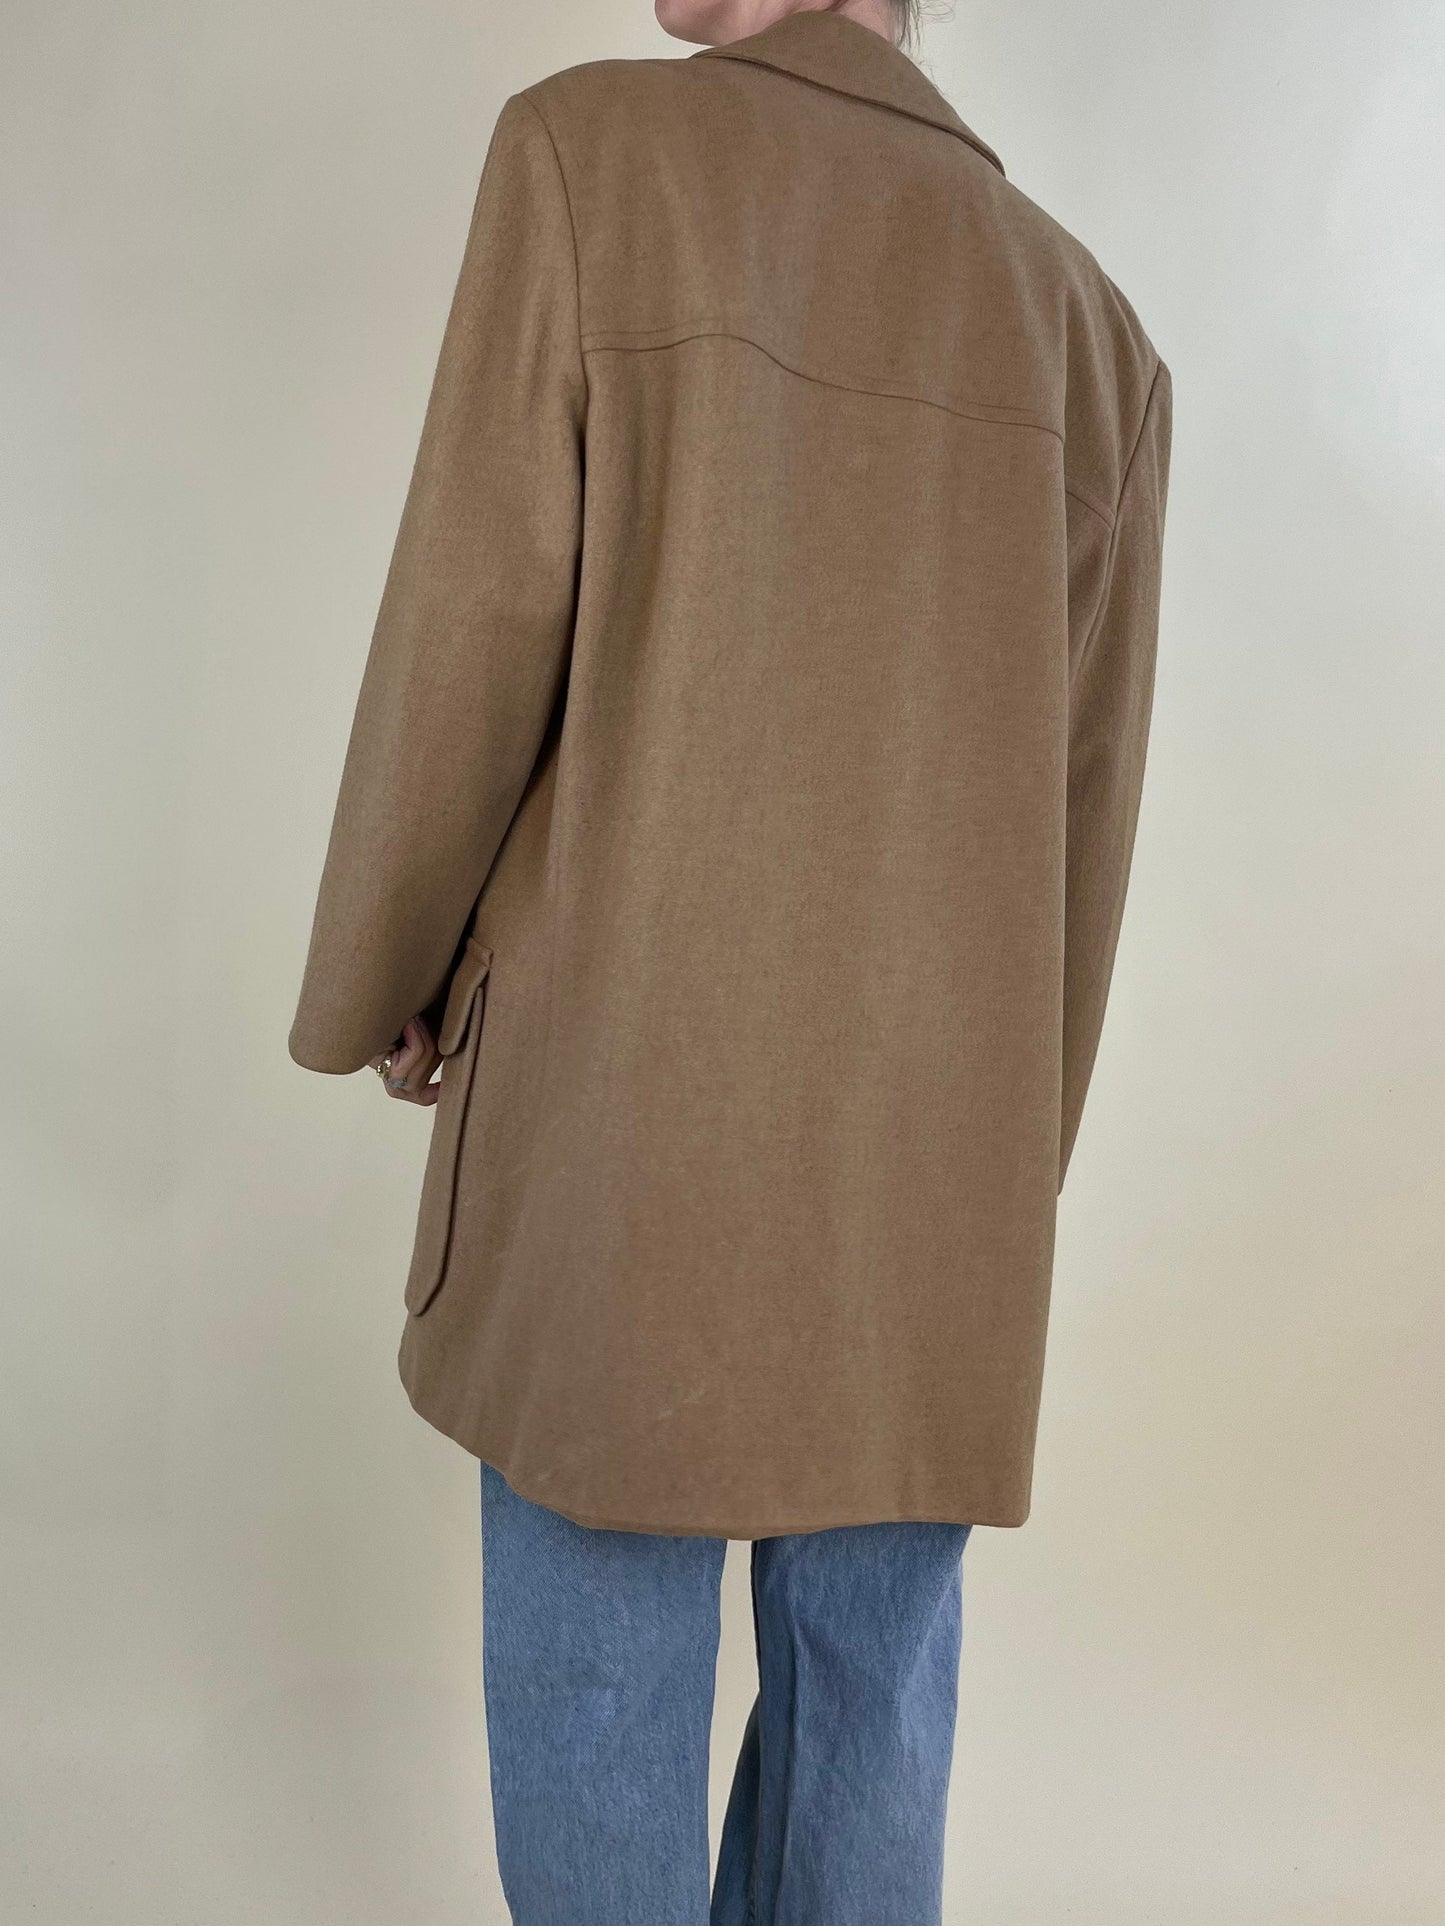 Vintage Pendleton Beige Wool Chore Jacket / Large